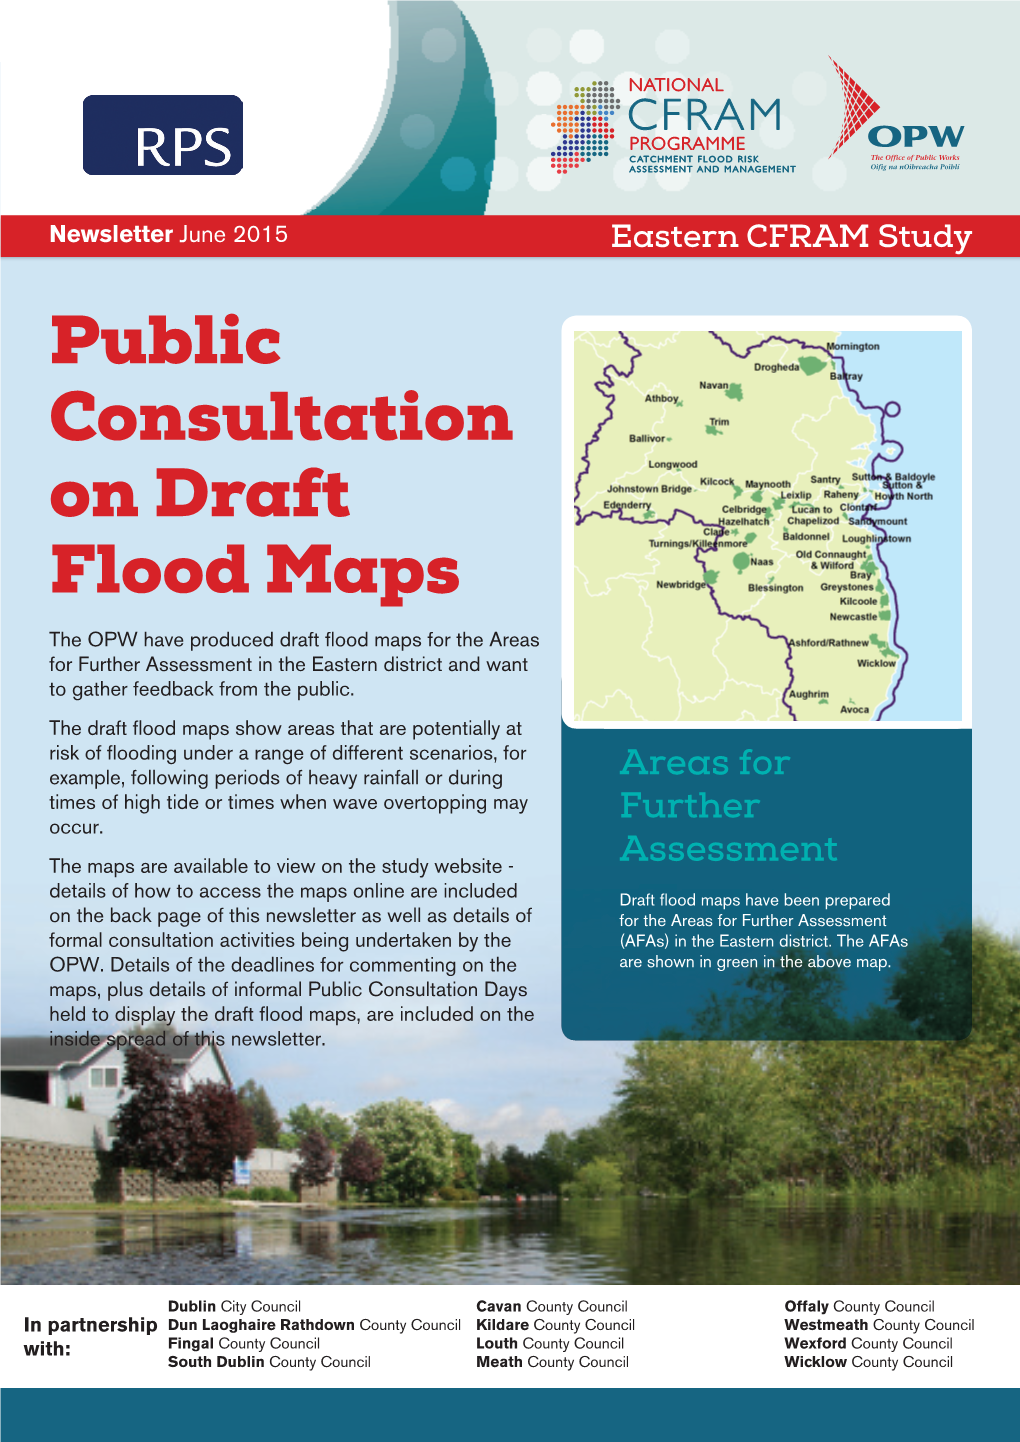 Public Consultation on Draft Flood Maps